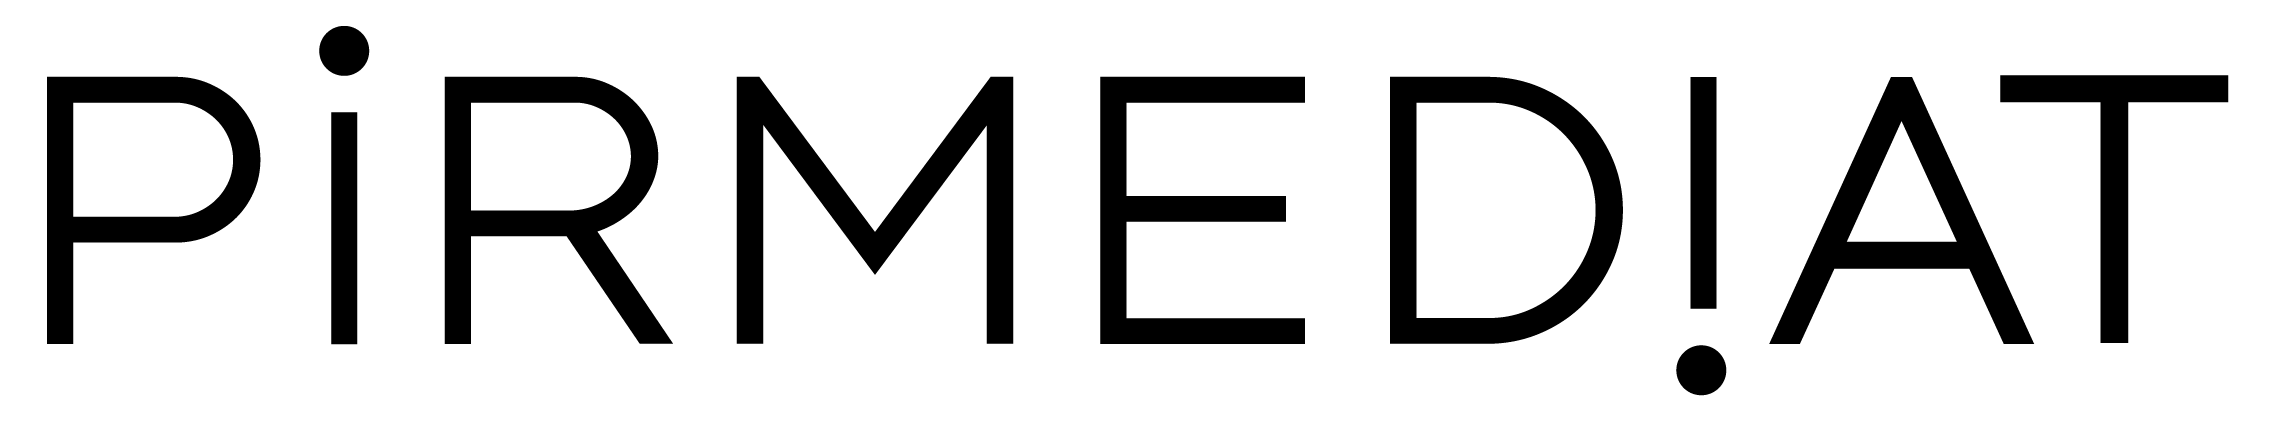 Pirmediat - logo